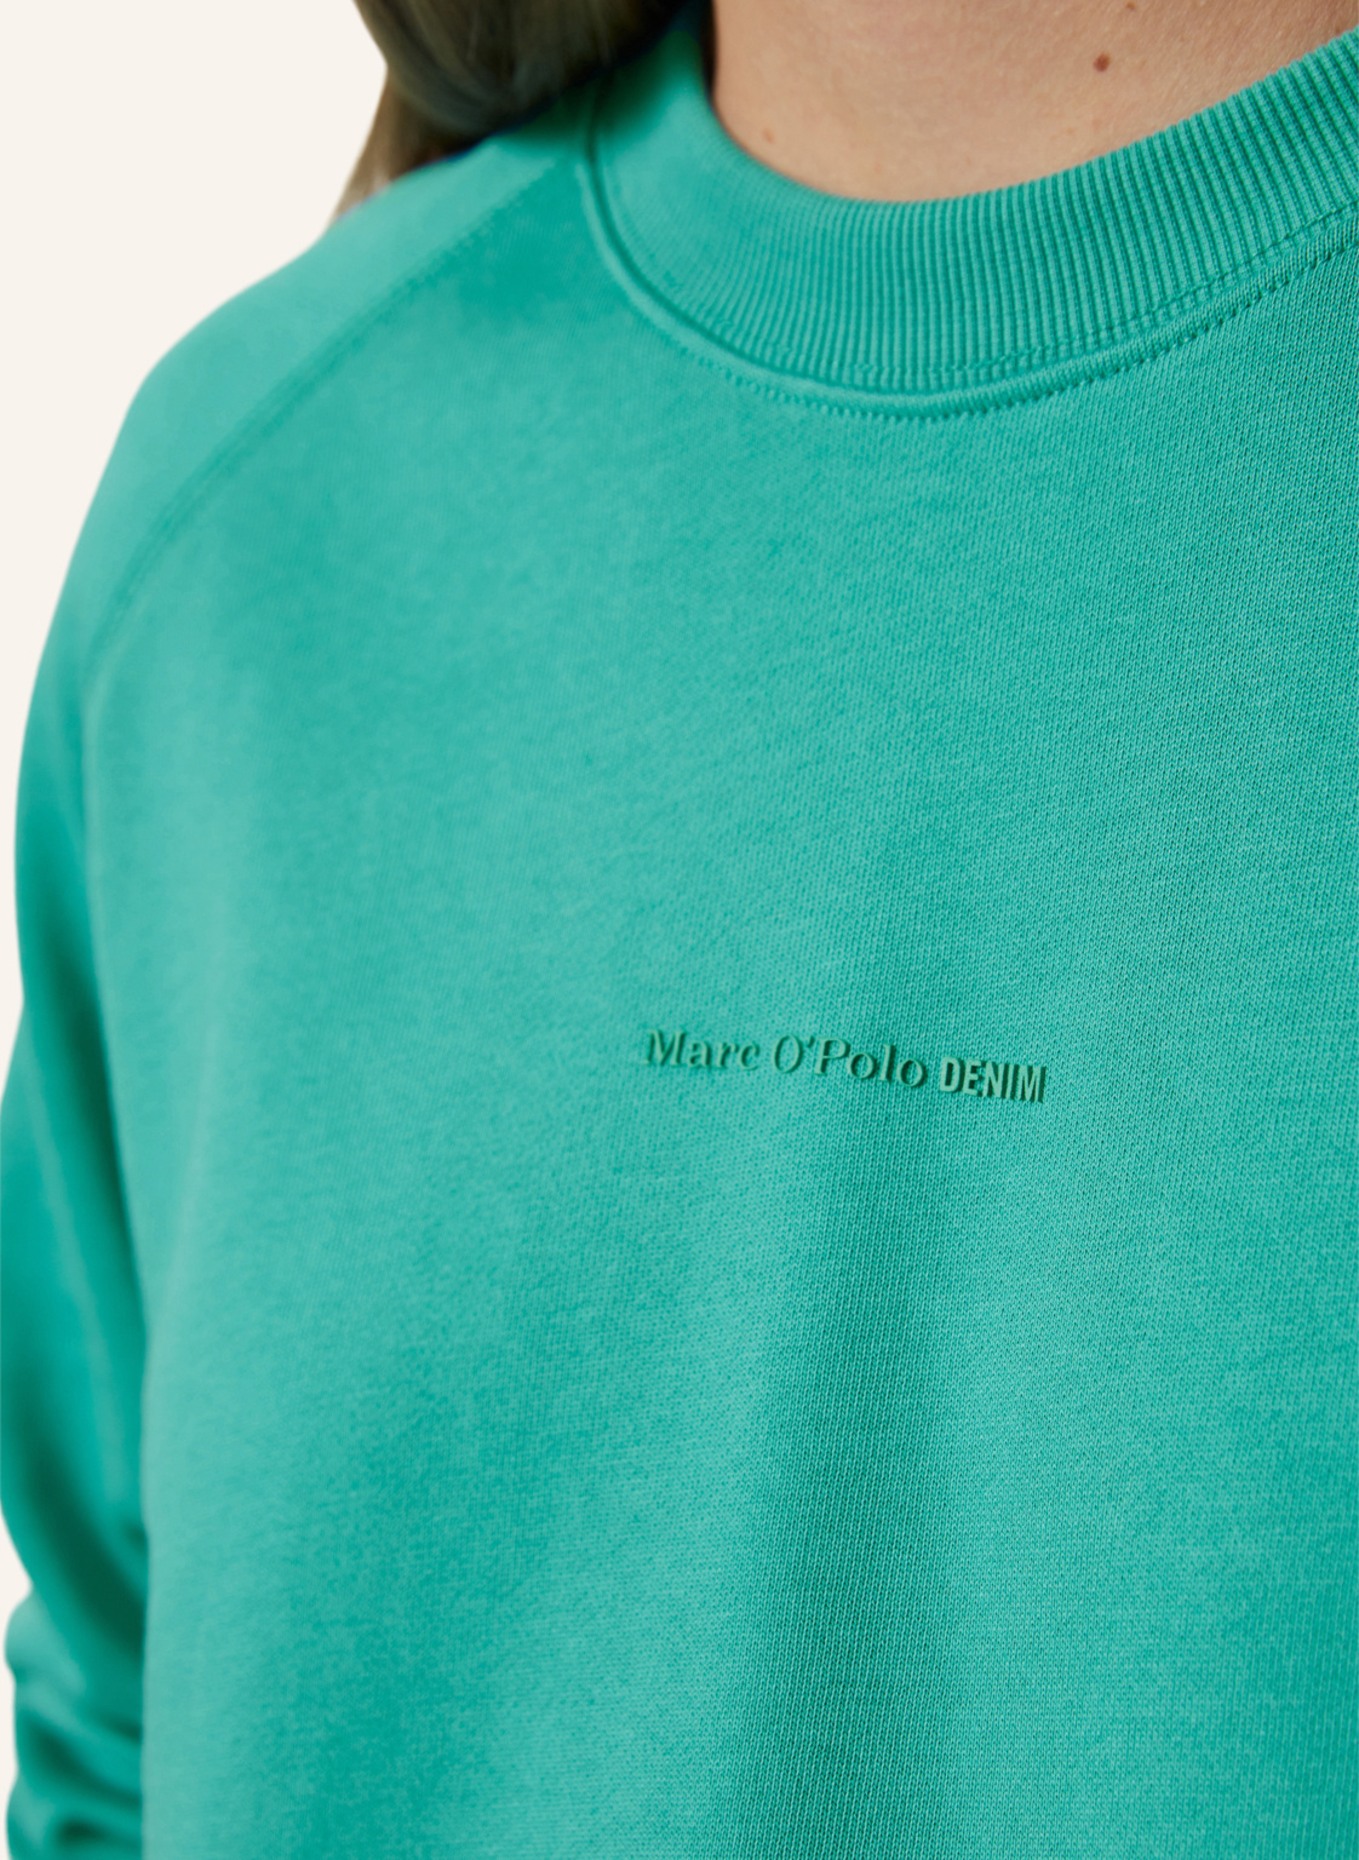 Marc O'Polo DENIM Sweatshirt, Farbe: GRÜN (Bild 3)